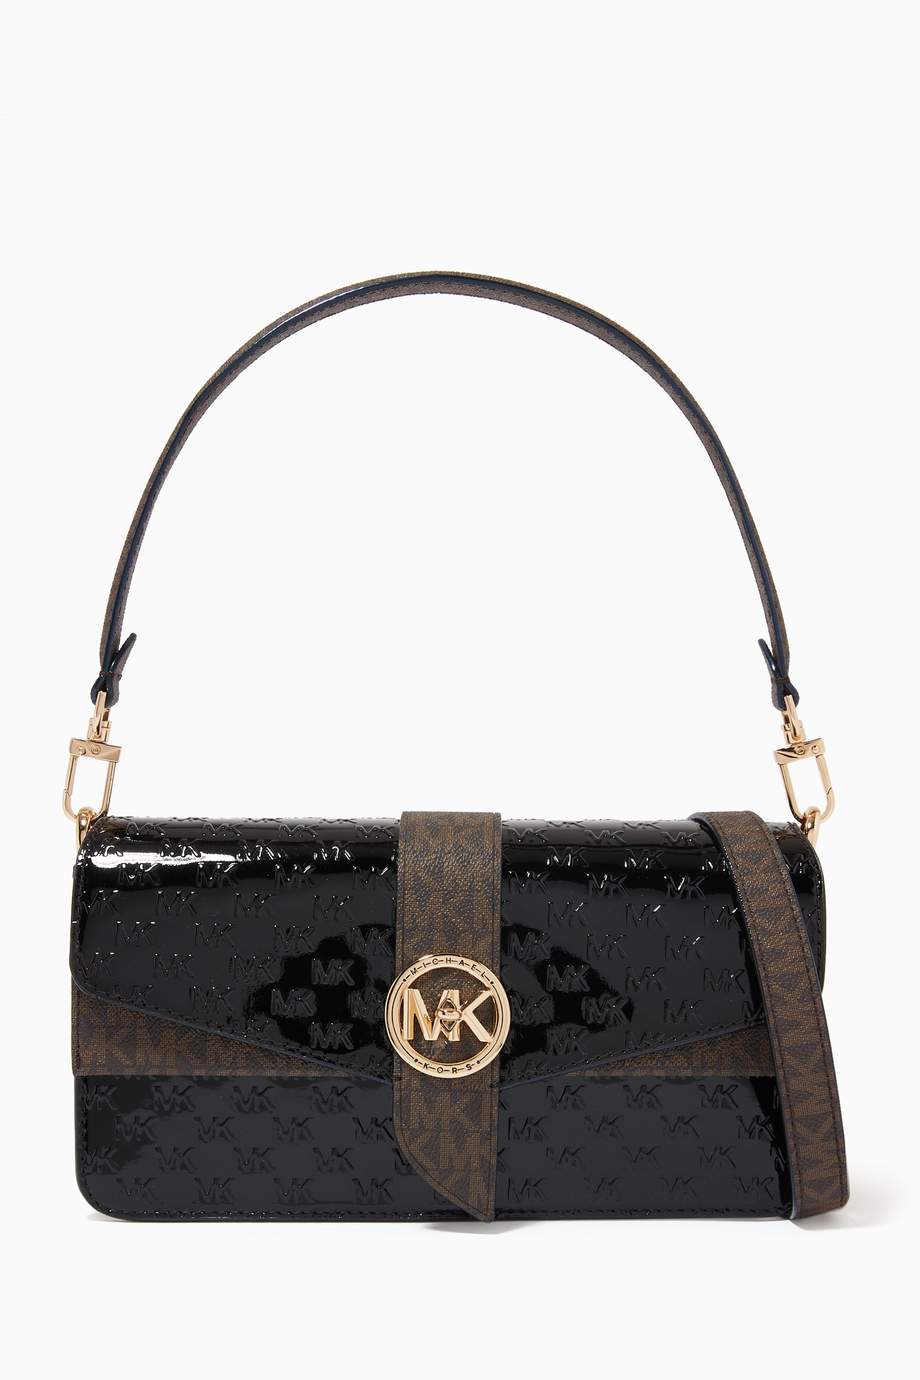 Shop Michael Kors Black Medium Greenwich Shoulder Bag in Embossed Patent Leather for Women | Ounass UAE